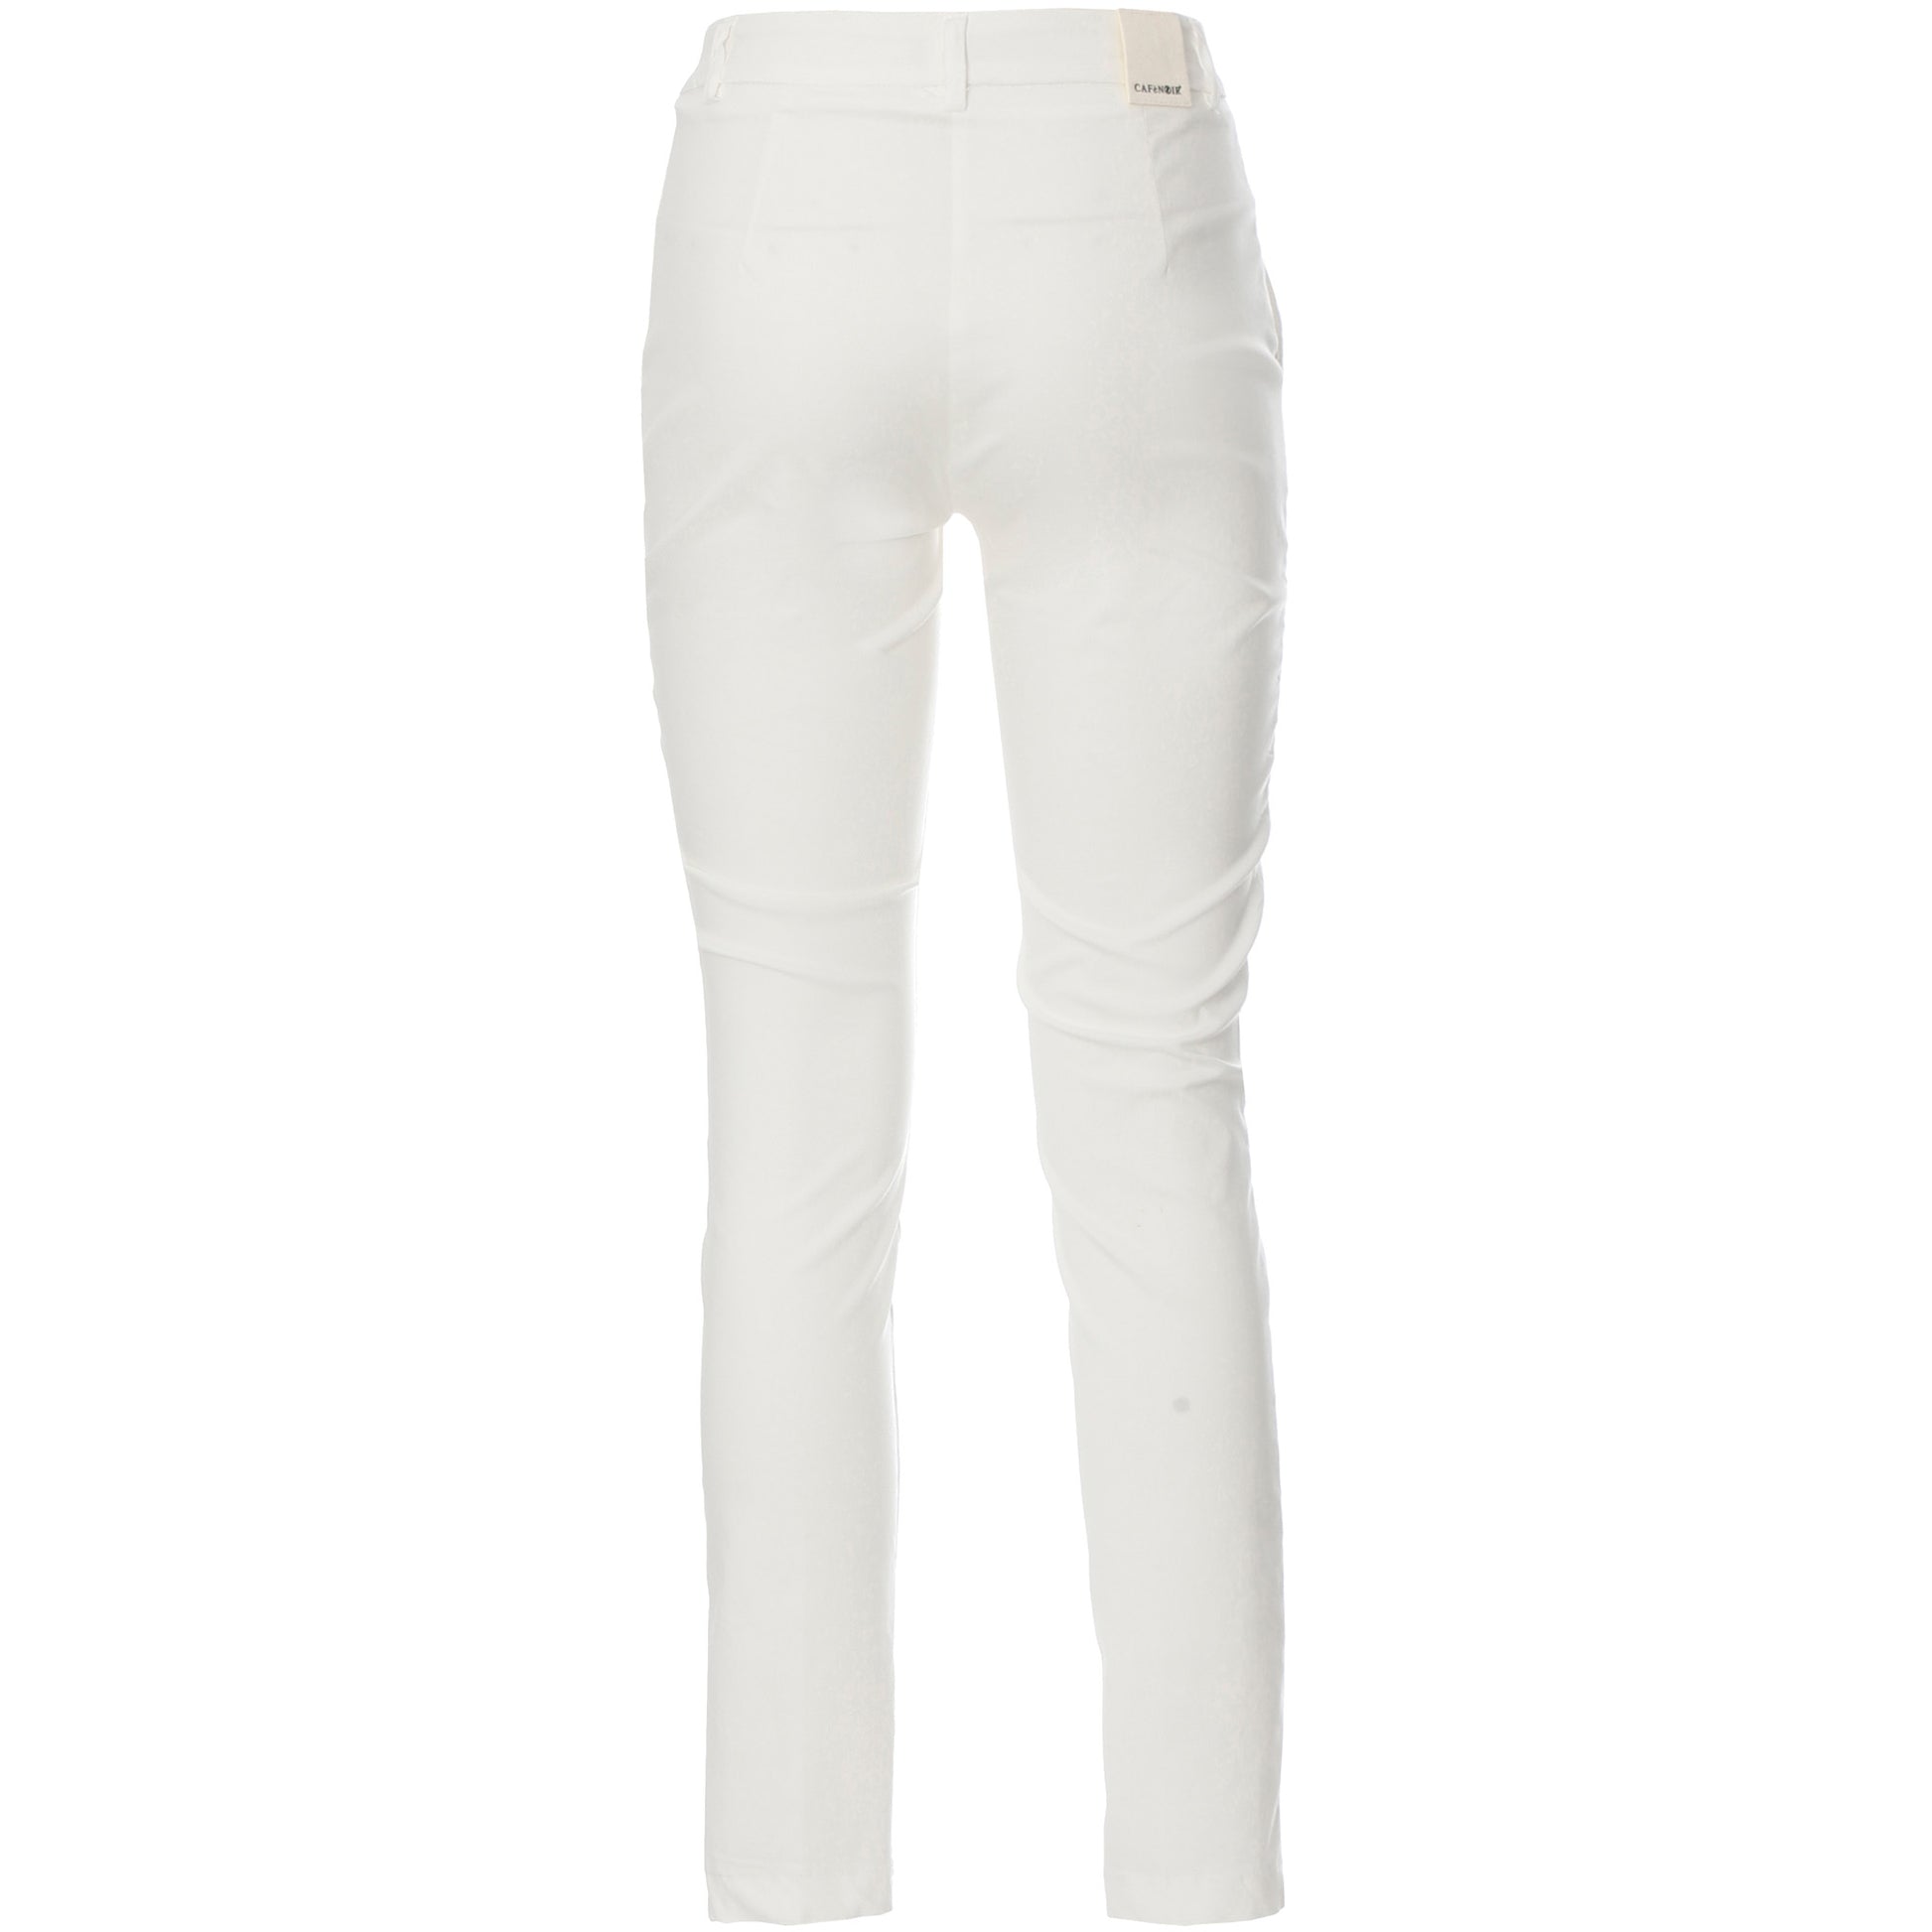 CAFèNOIR pantalone bianco in tessuto elastico chino super stretch